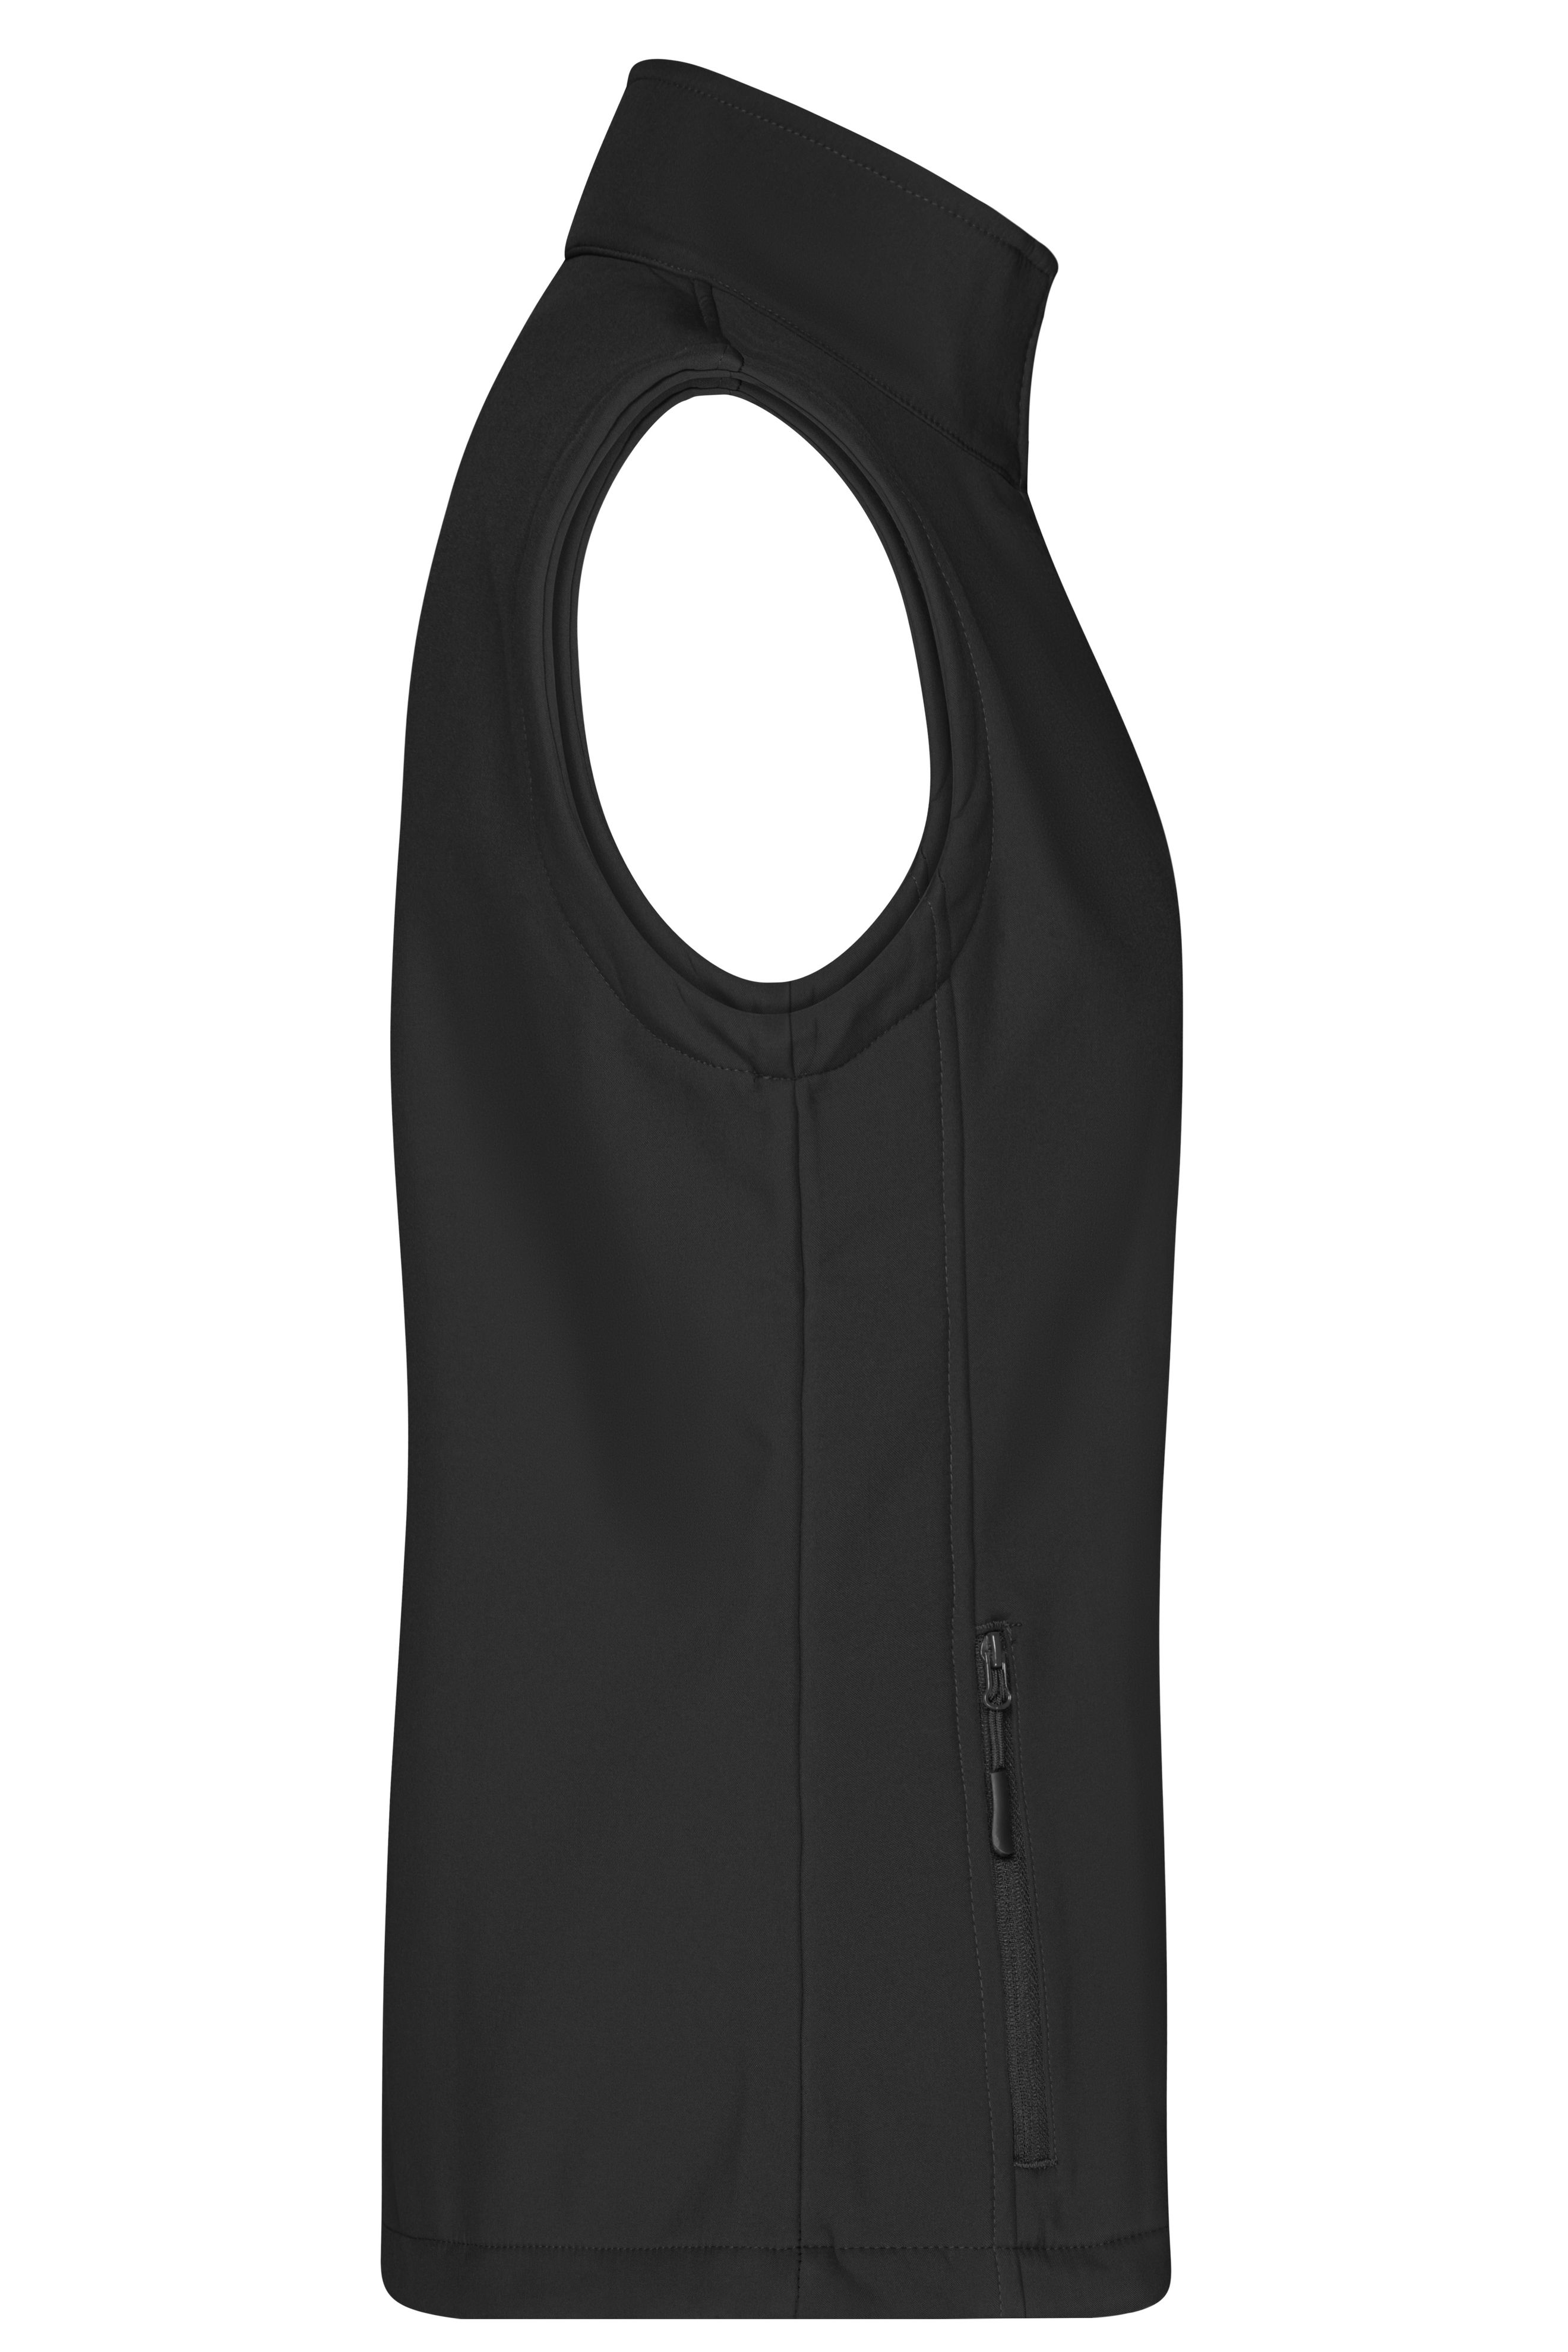 Ladies Ladies' Promo Softshell Vest Black/black-Daiber